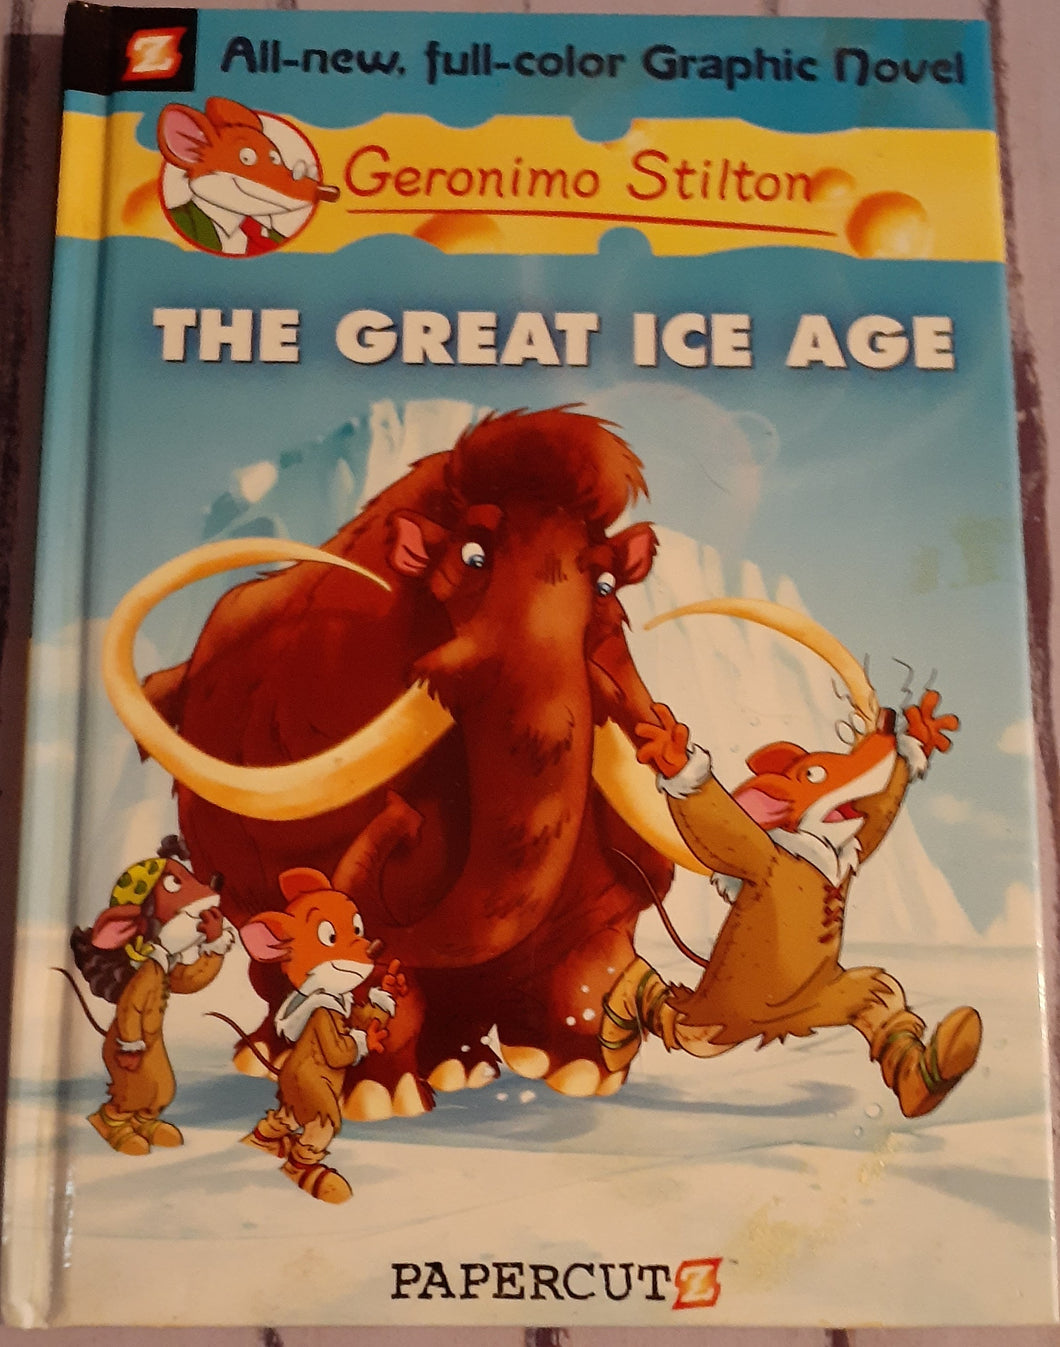 Geronimo Stilton - The Great Ice Age